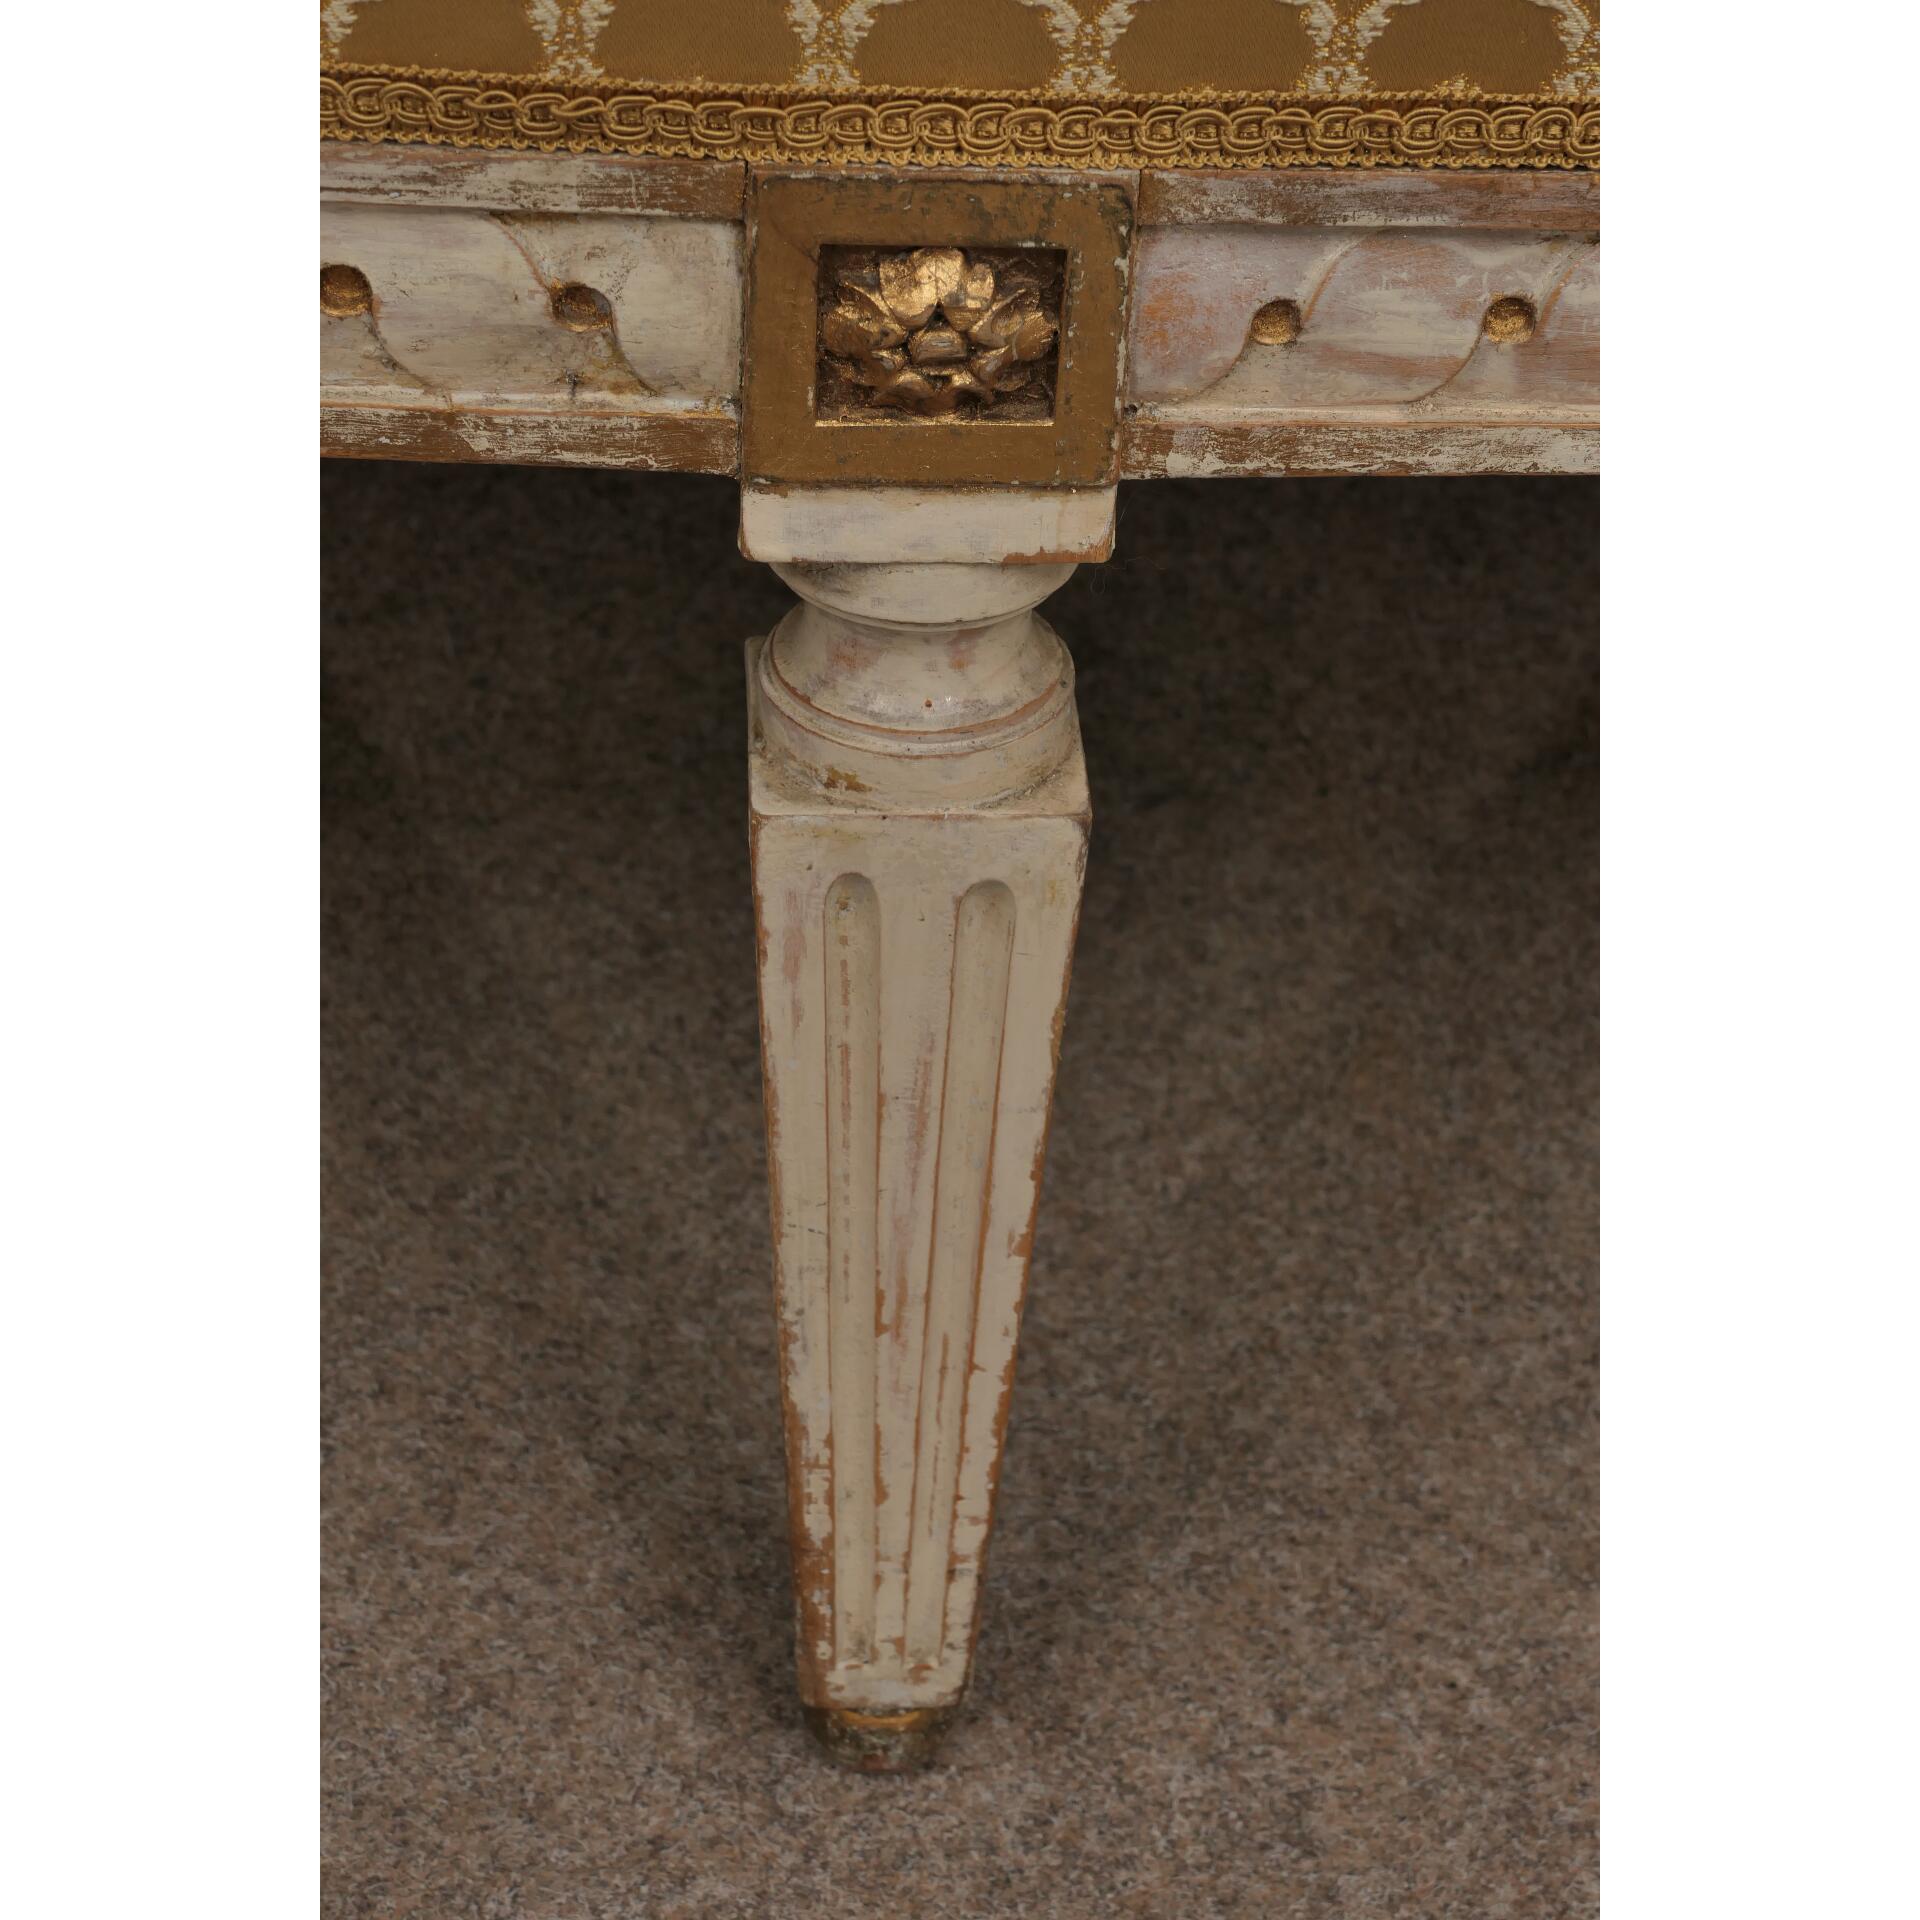 7 tlg. Ameublement, Stil Louis XVI, Ende 19. Jhd., weiß-gold gefasste Hartholzgestelle, intaktes Po - Image 8 of 9